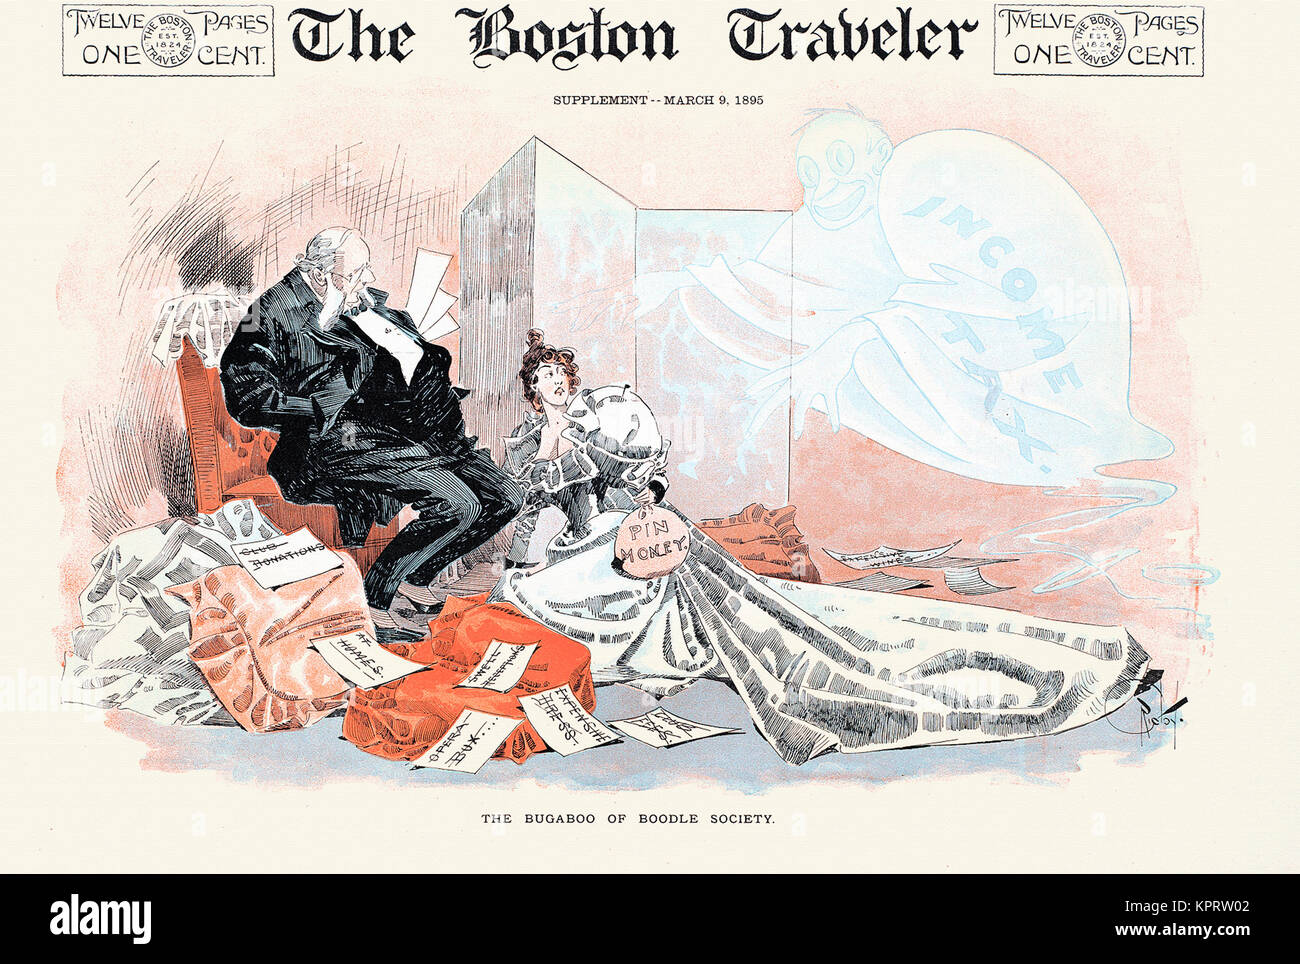 The Boston traveler, supplement -- March 9, 1895 Stock Photo